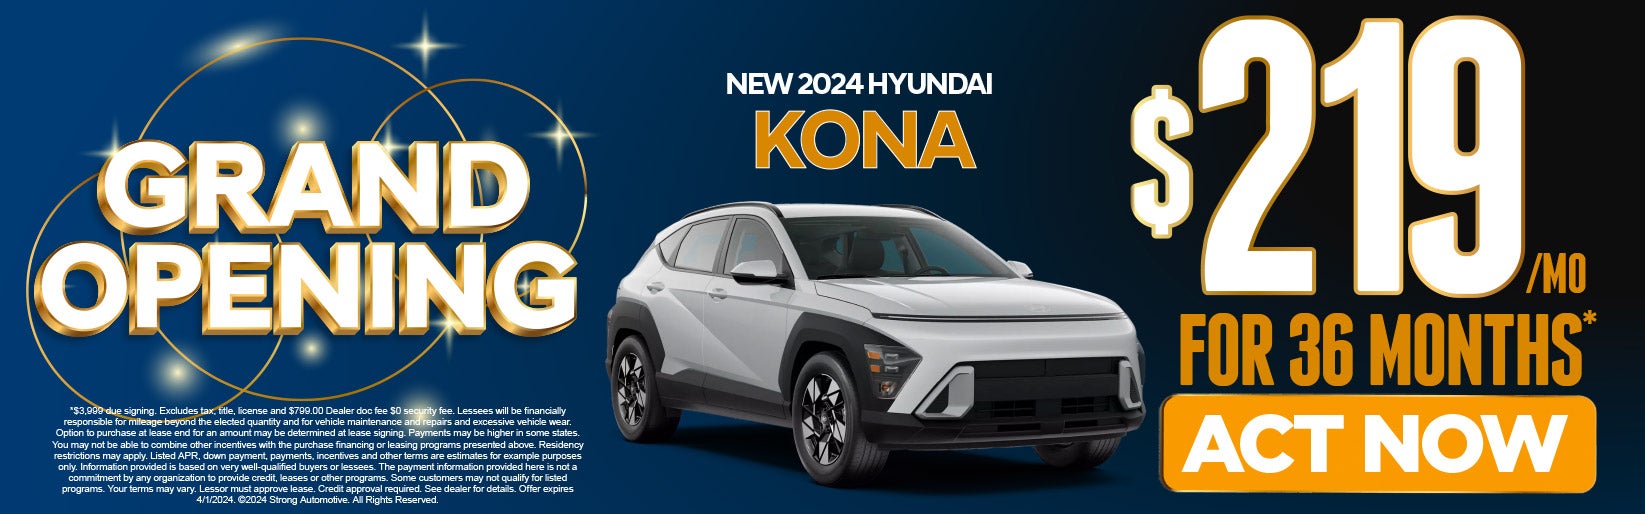 New 2024 Hyundai Kona Lease for $219/Mo*